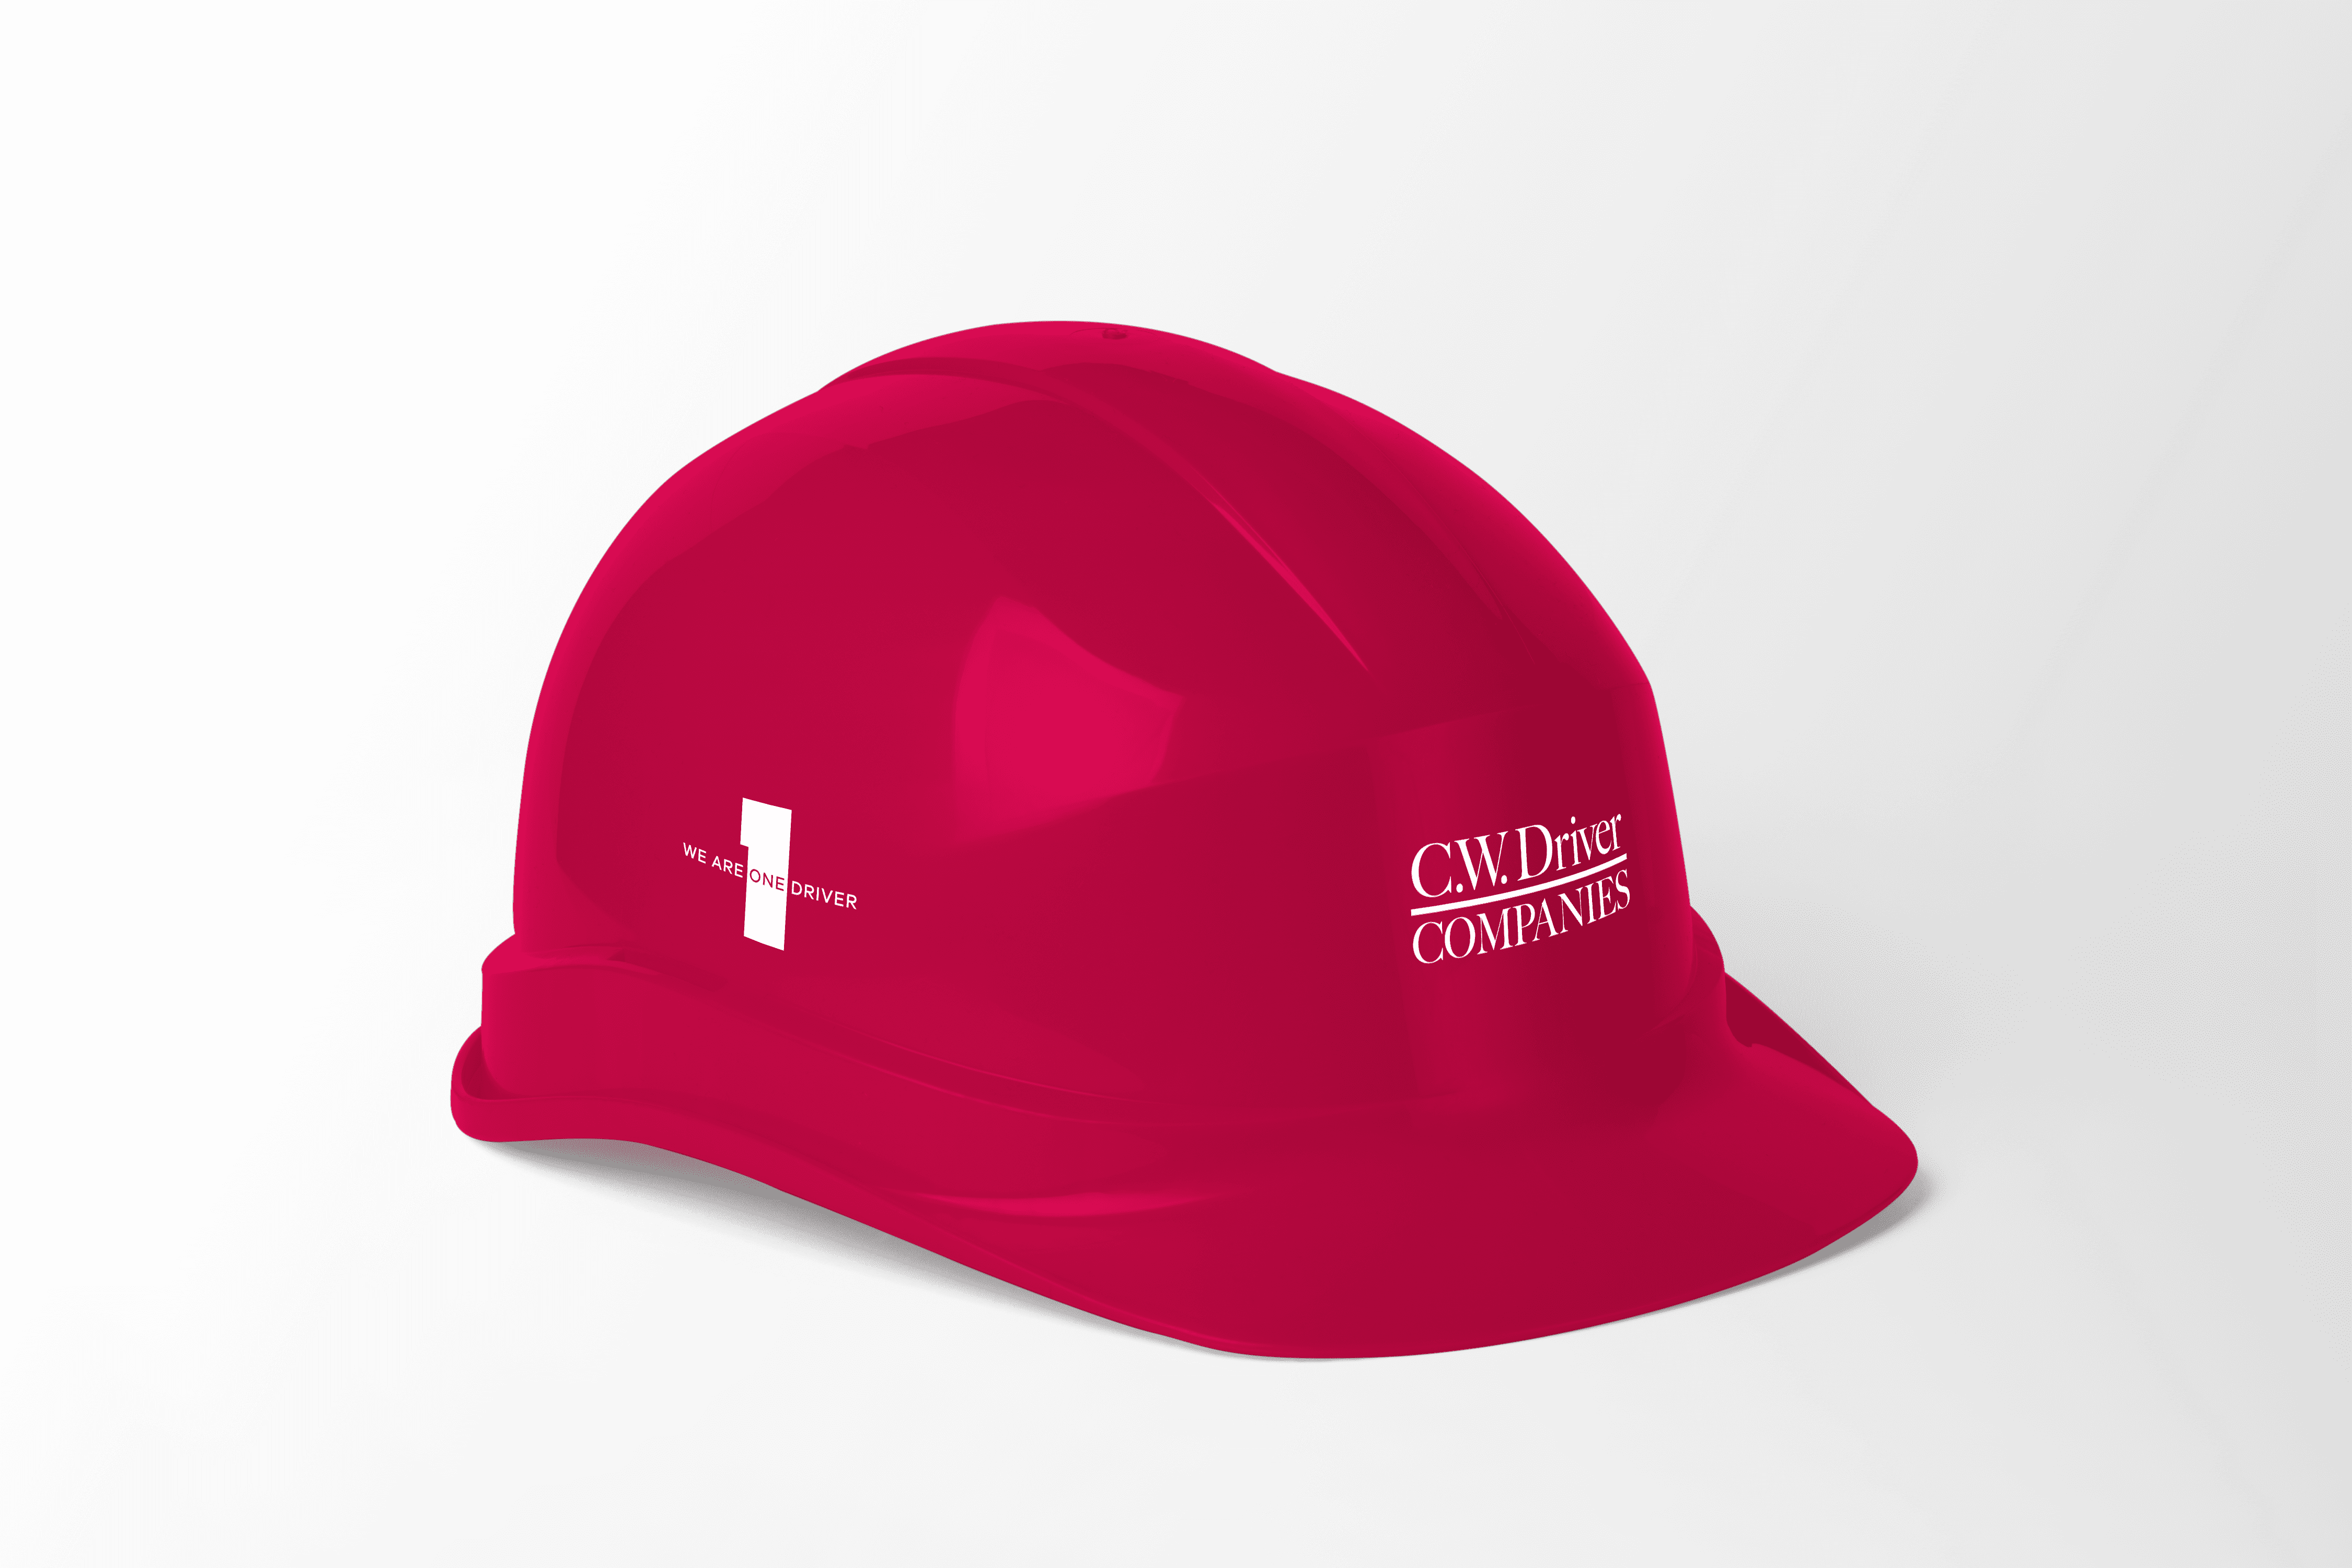 C.W. Driver One Driver 2020 Construction hard hat helmet design